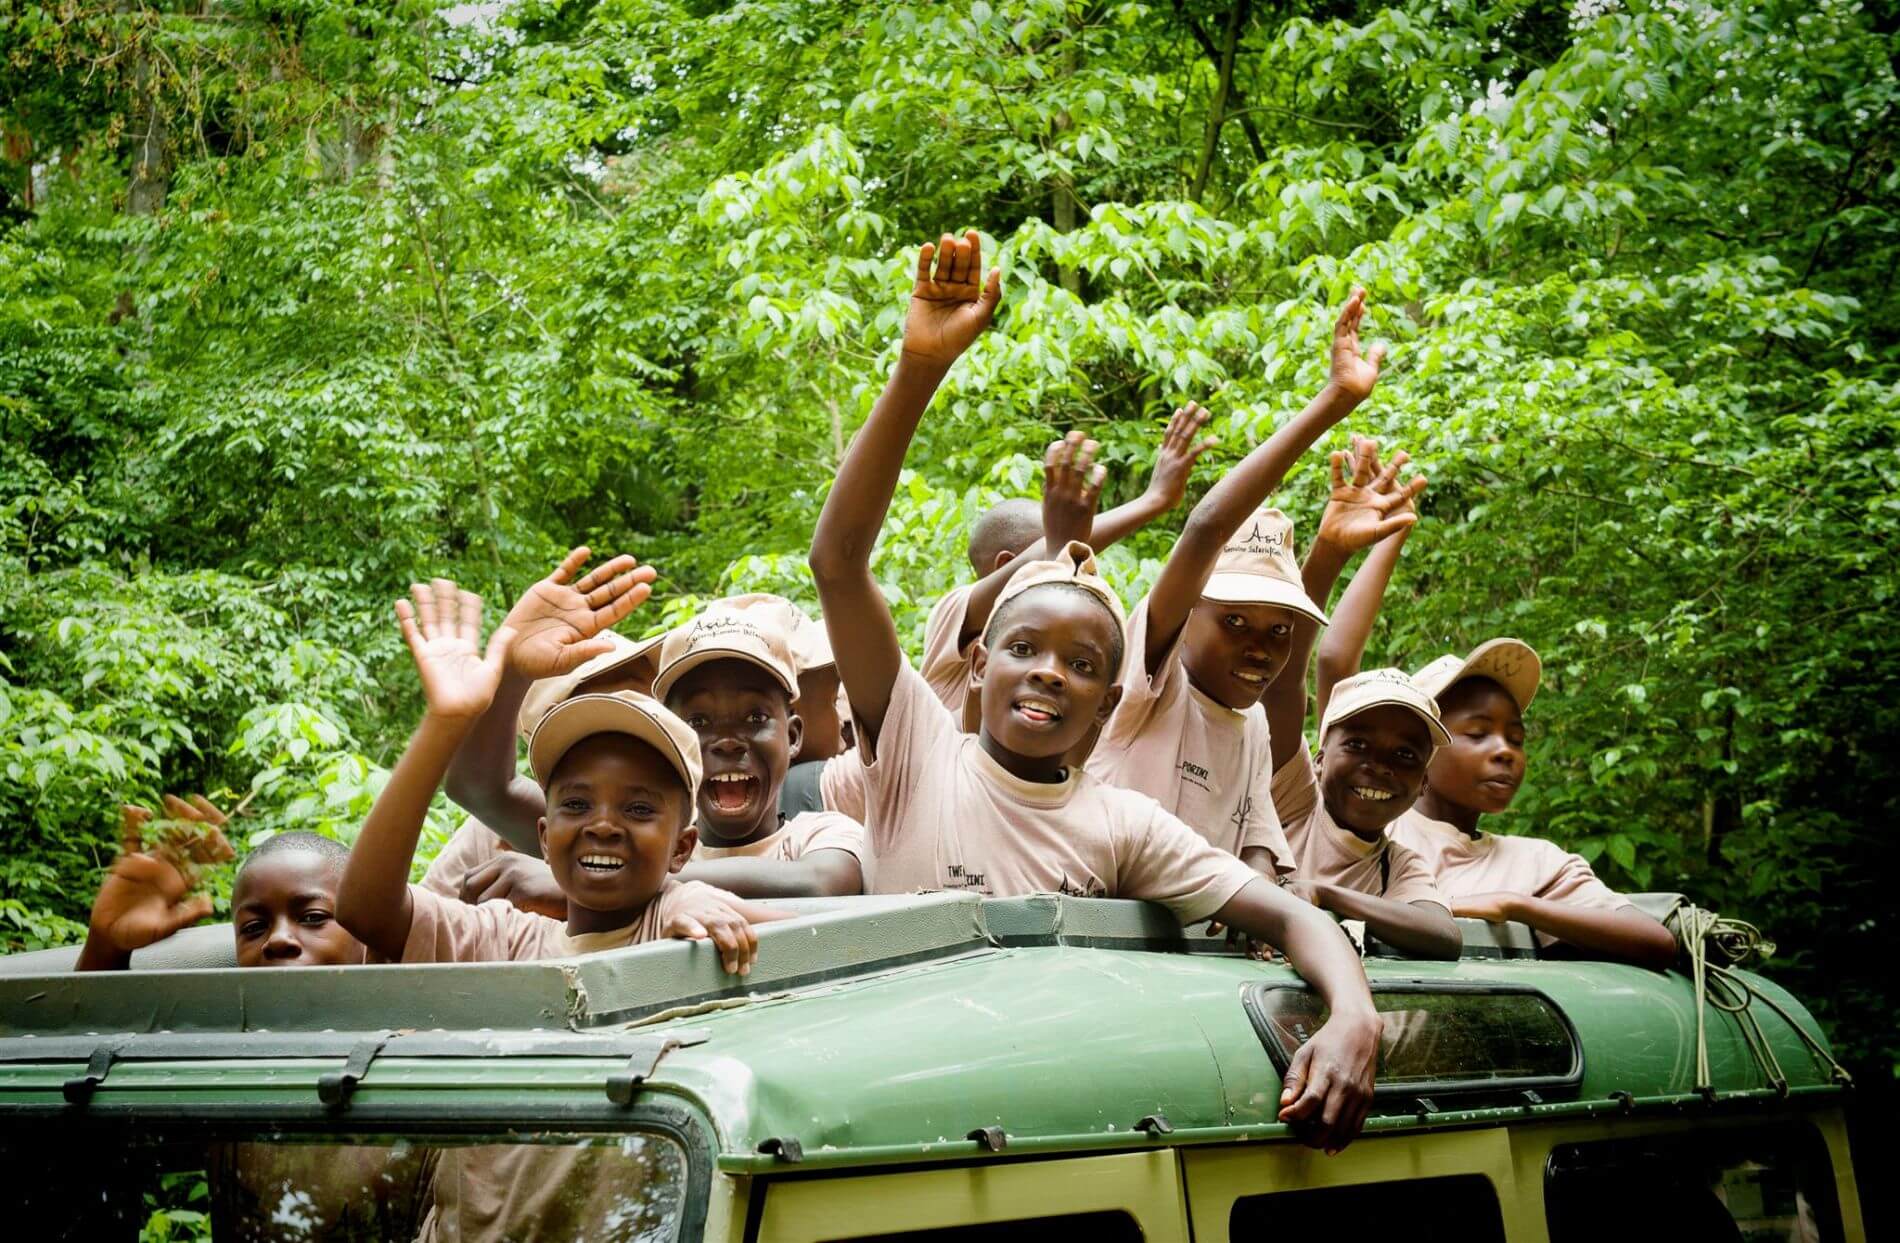 Kids in Rwanda get the opportunity to go on safari